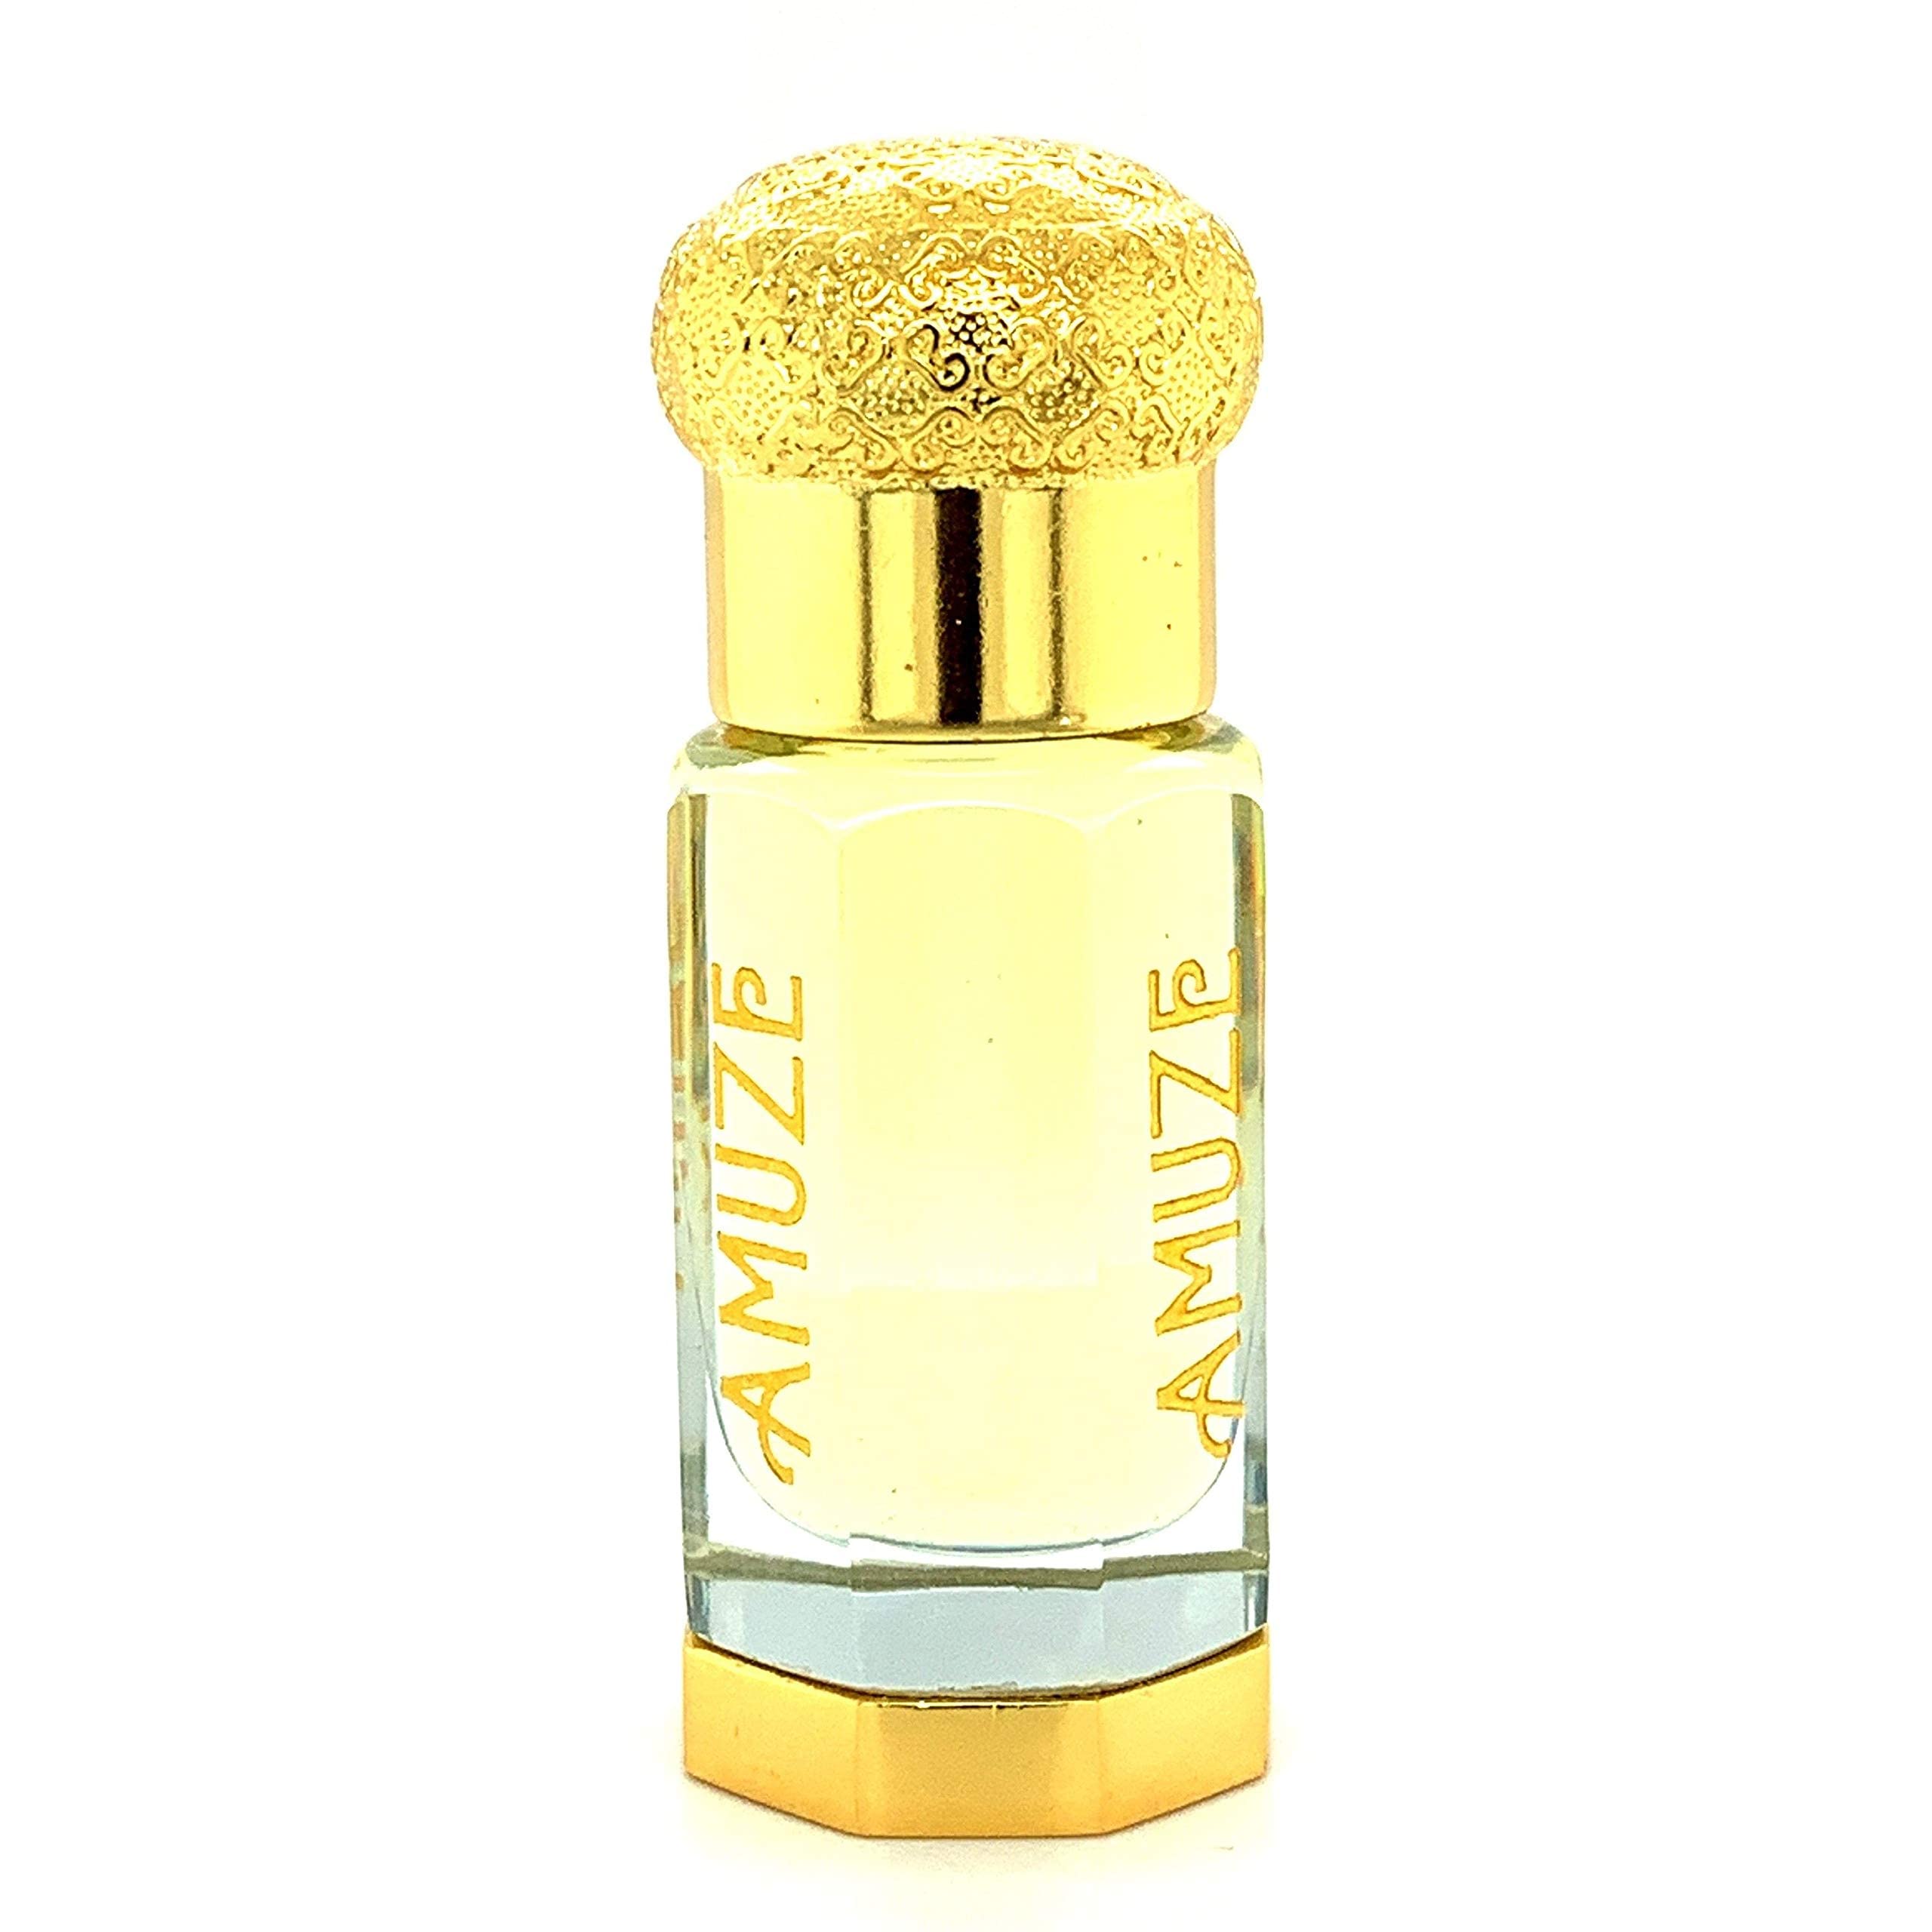 Amuze Fragrance Amber Romance, 3 ml | Premium Perfume Oil | Attar Oil | Alcohol-Free | Vegan & Cruelty-Free